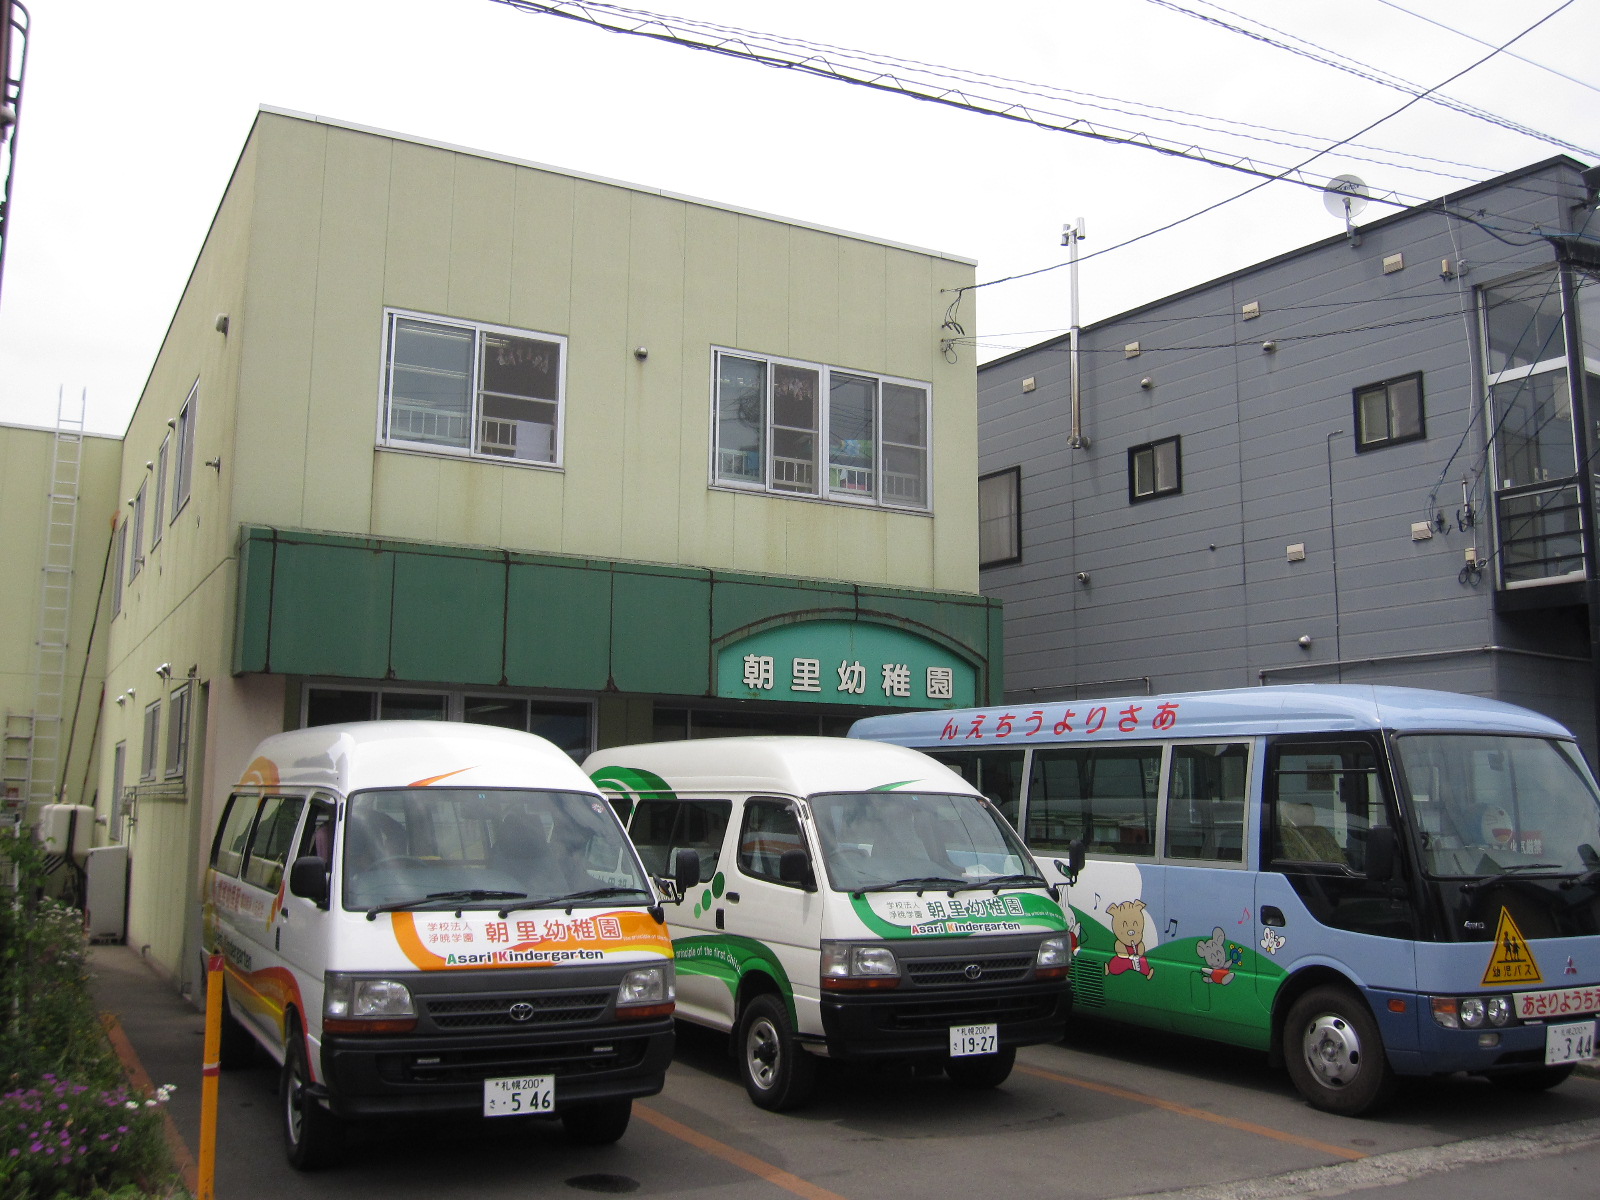 kindergarten ・ Nursery. Asari kindergarten (kindergarten ・ 1001m to the nursery)